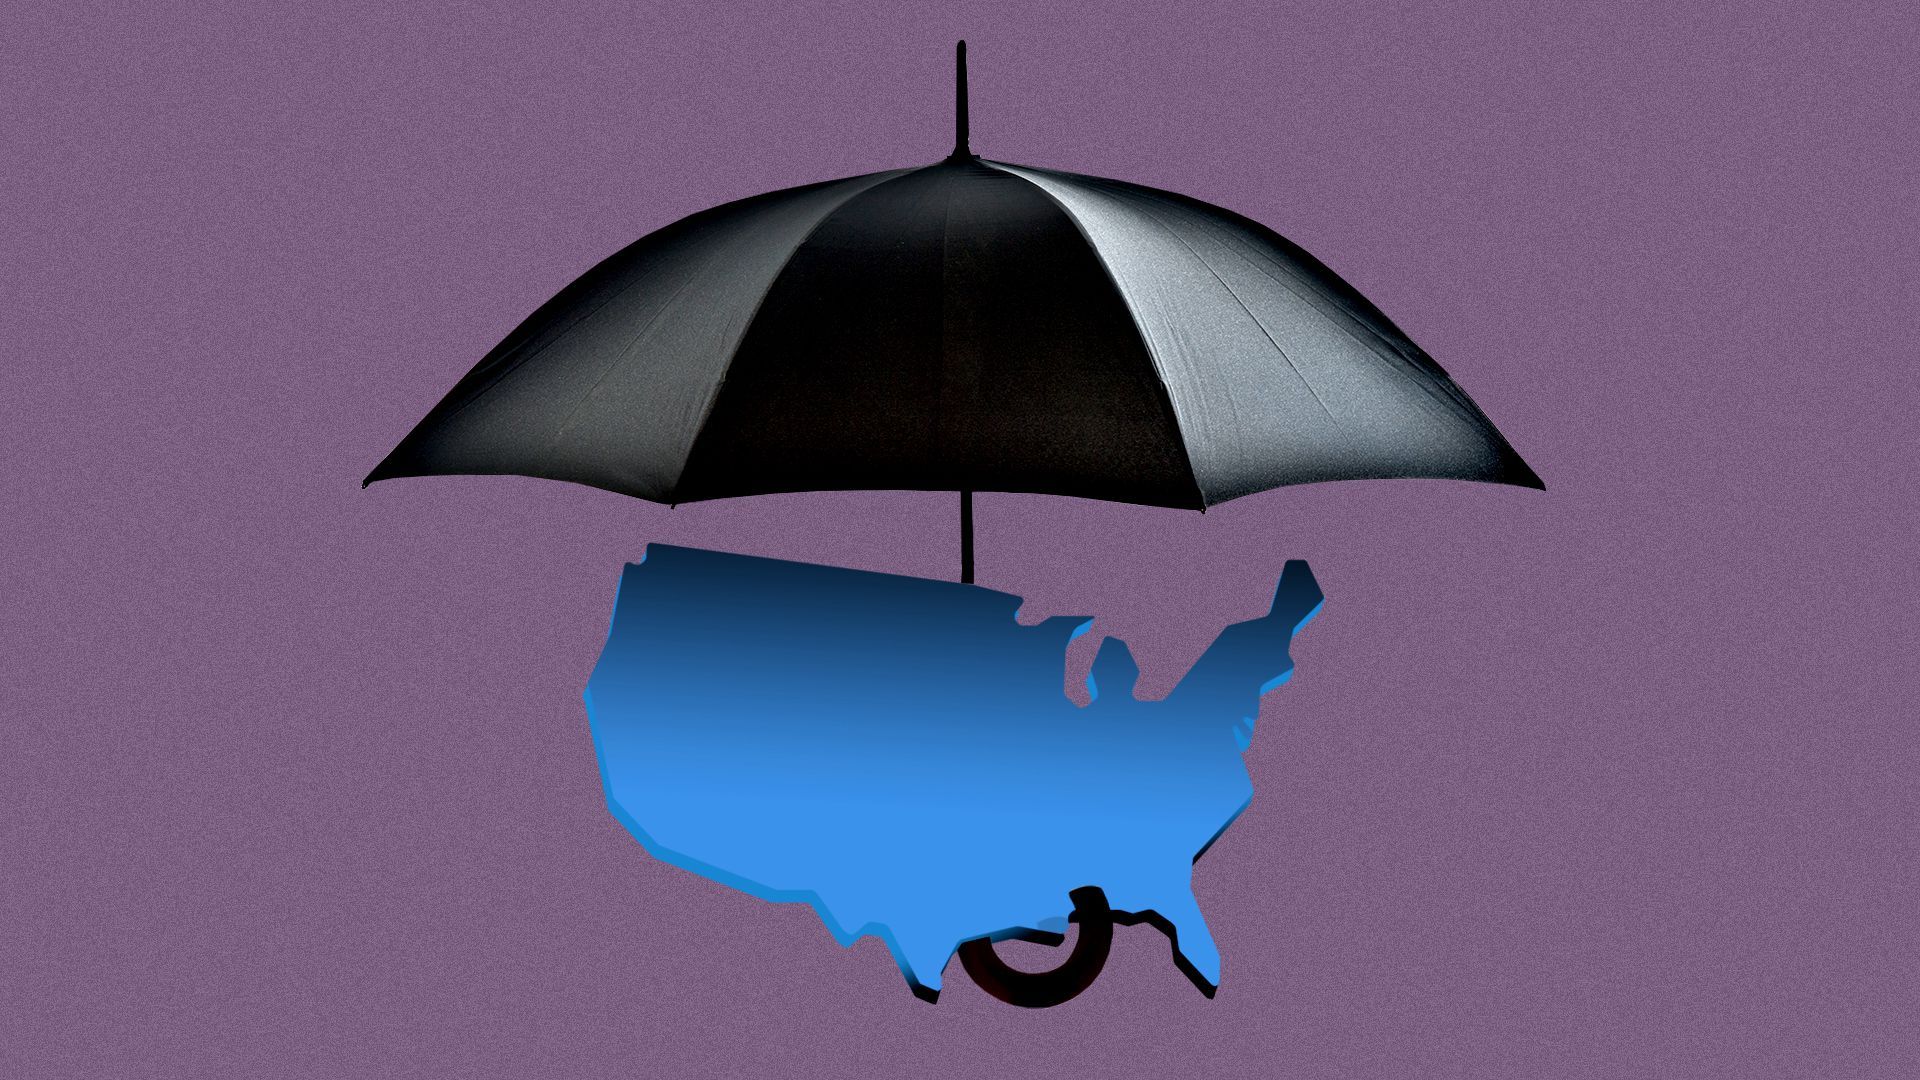 Illustration of the U.S. map under a large rain umbrella